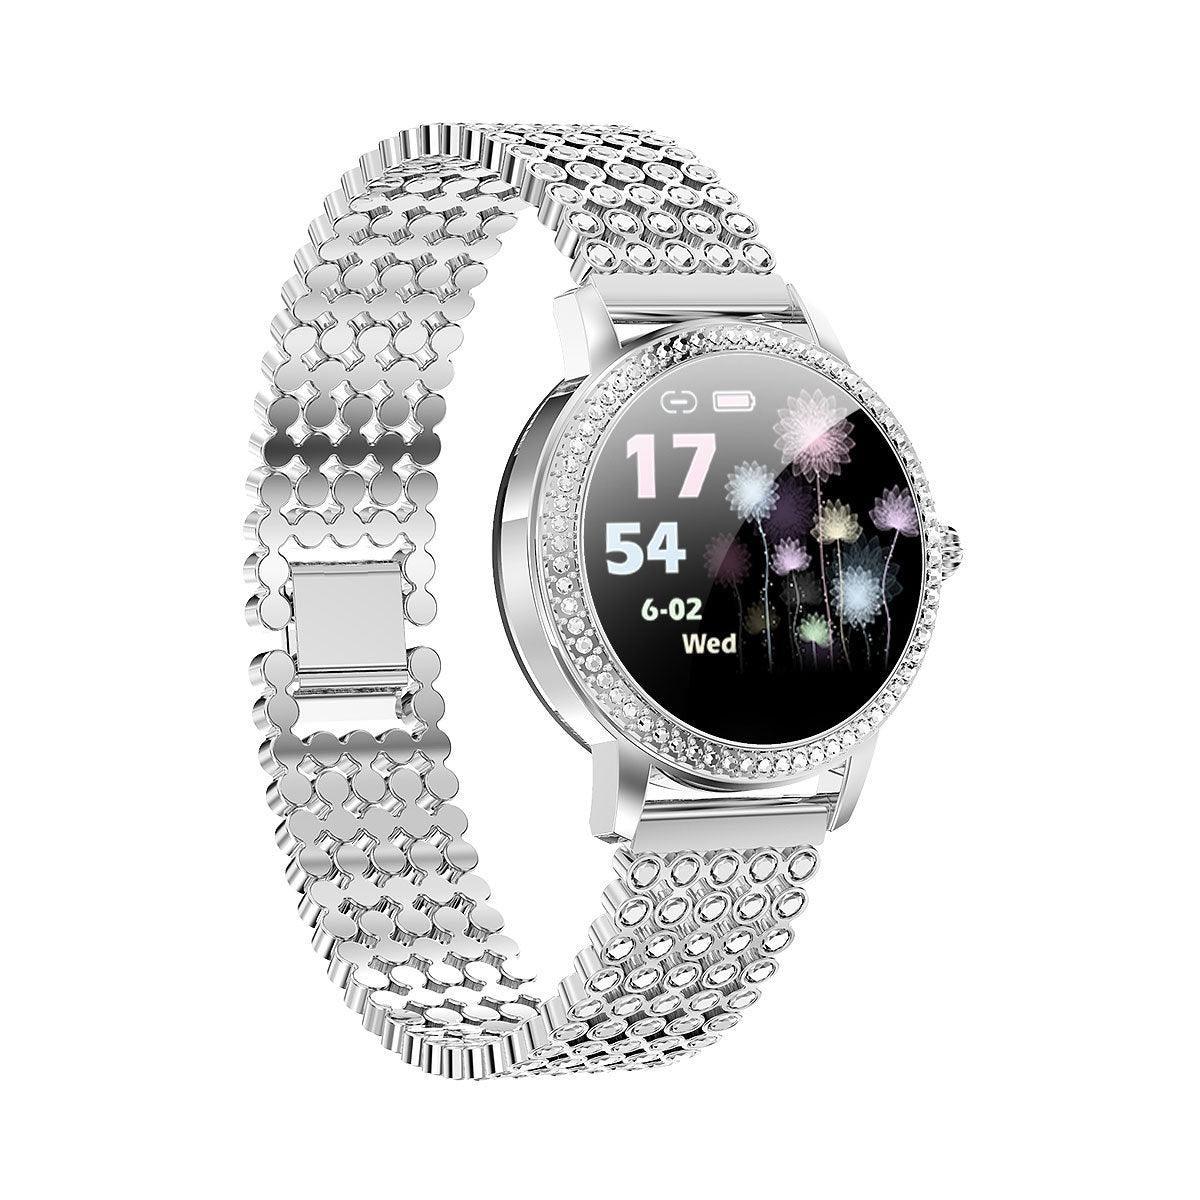 Fashion Women’s Smartwatch - ForVanity smart watches, women's jewellery & watches Watch